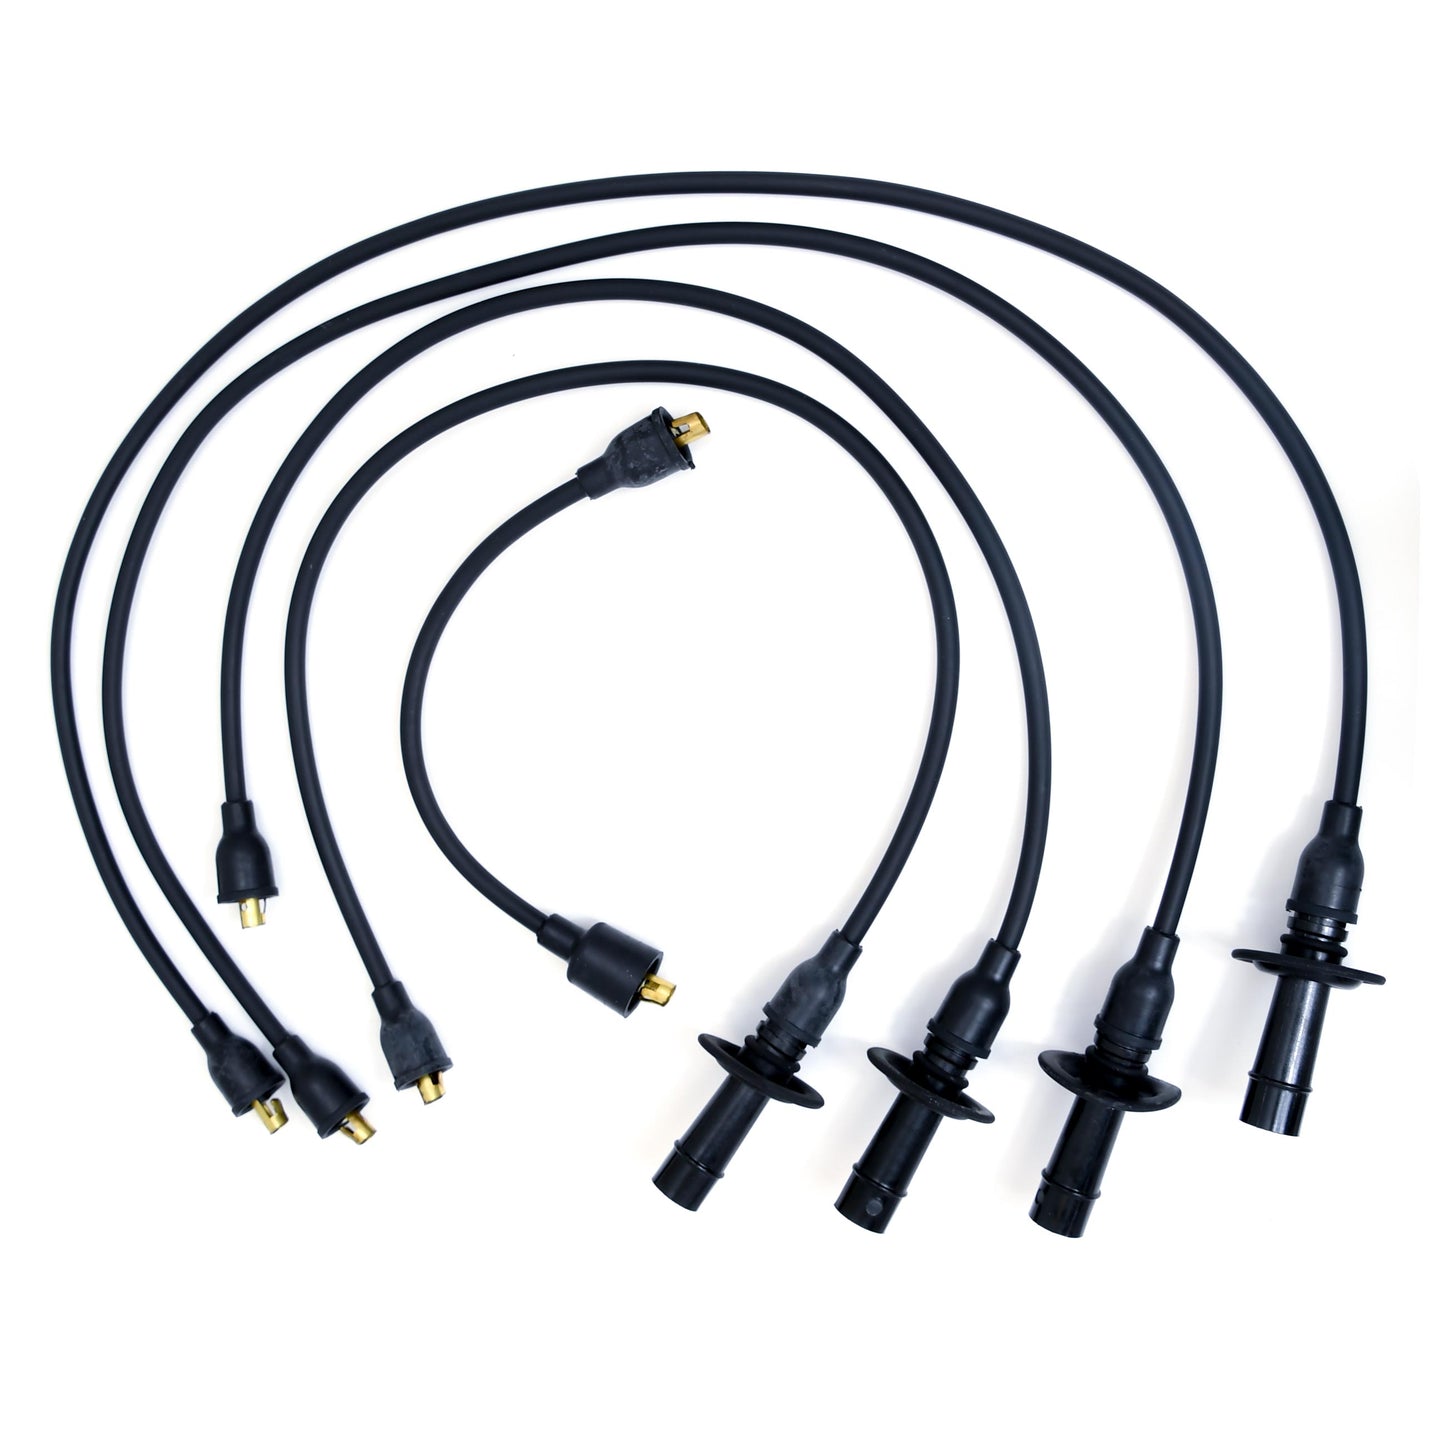 PerTronix 704101 Flame-Thrower Spark Plug Wires 4 cyl VW Custom Fit Black